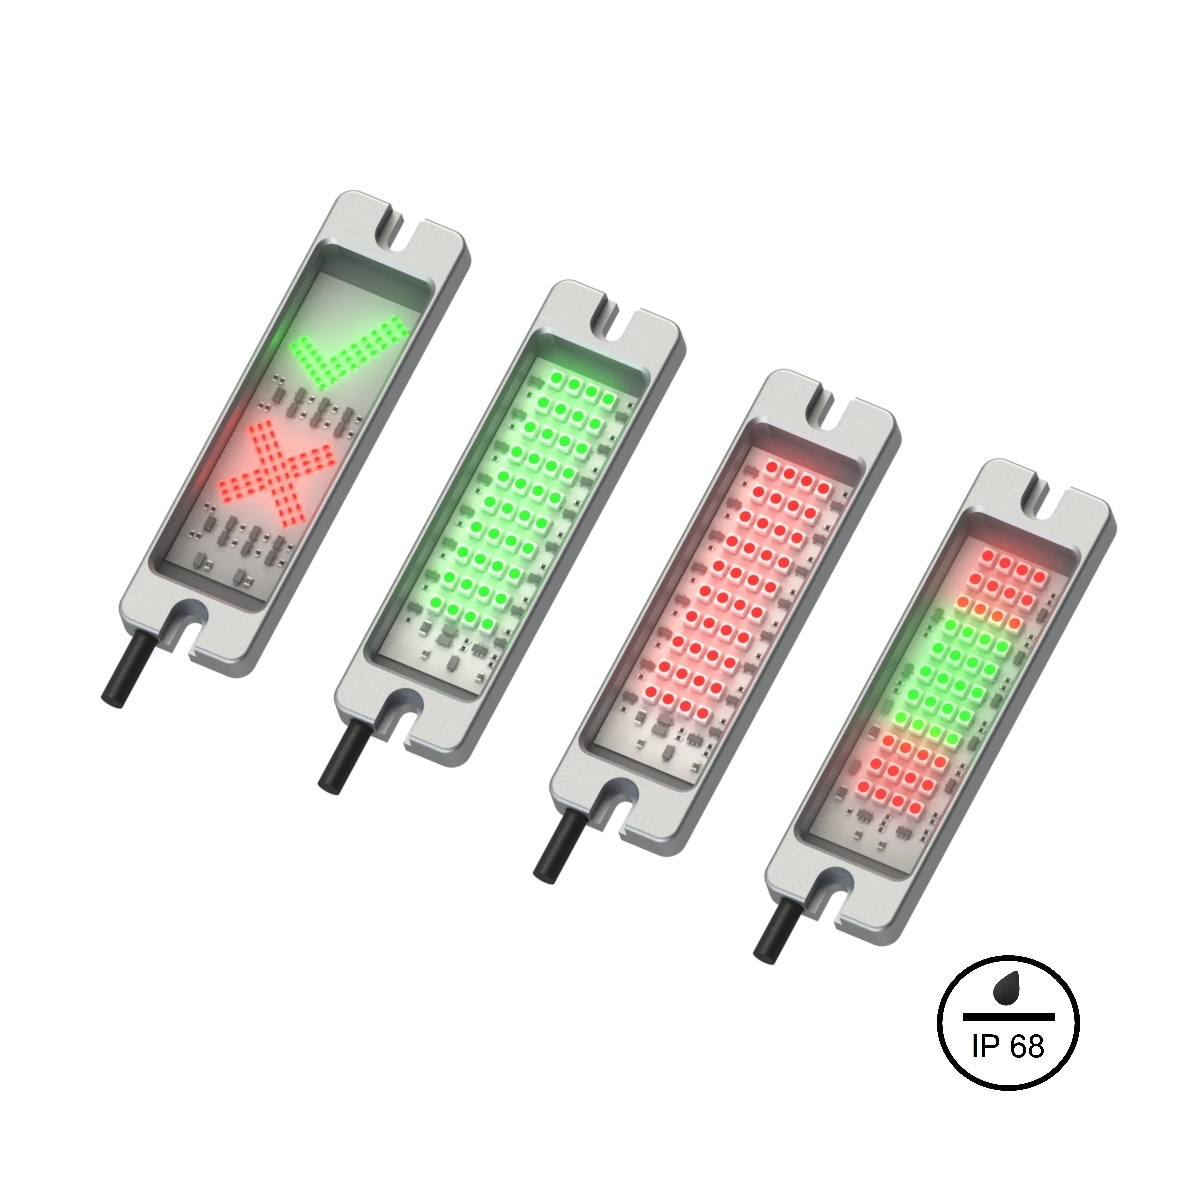 Compact signal lights